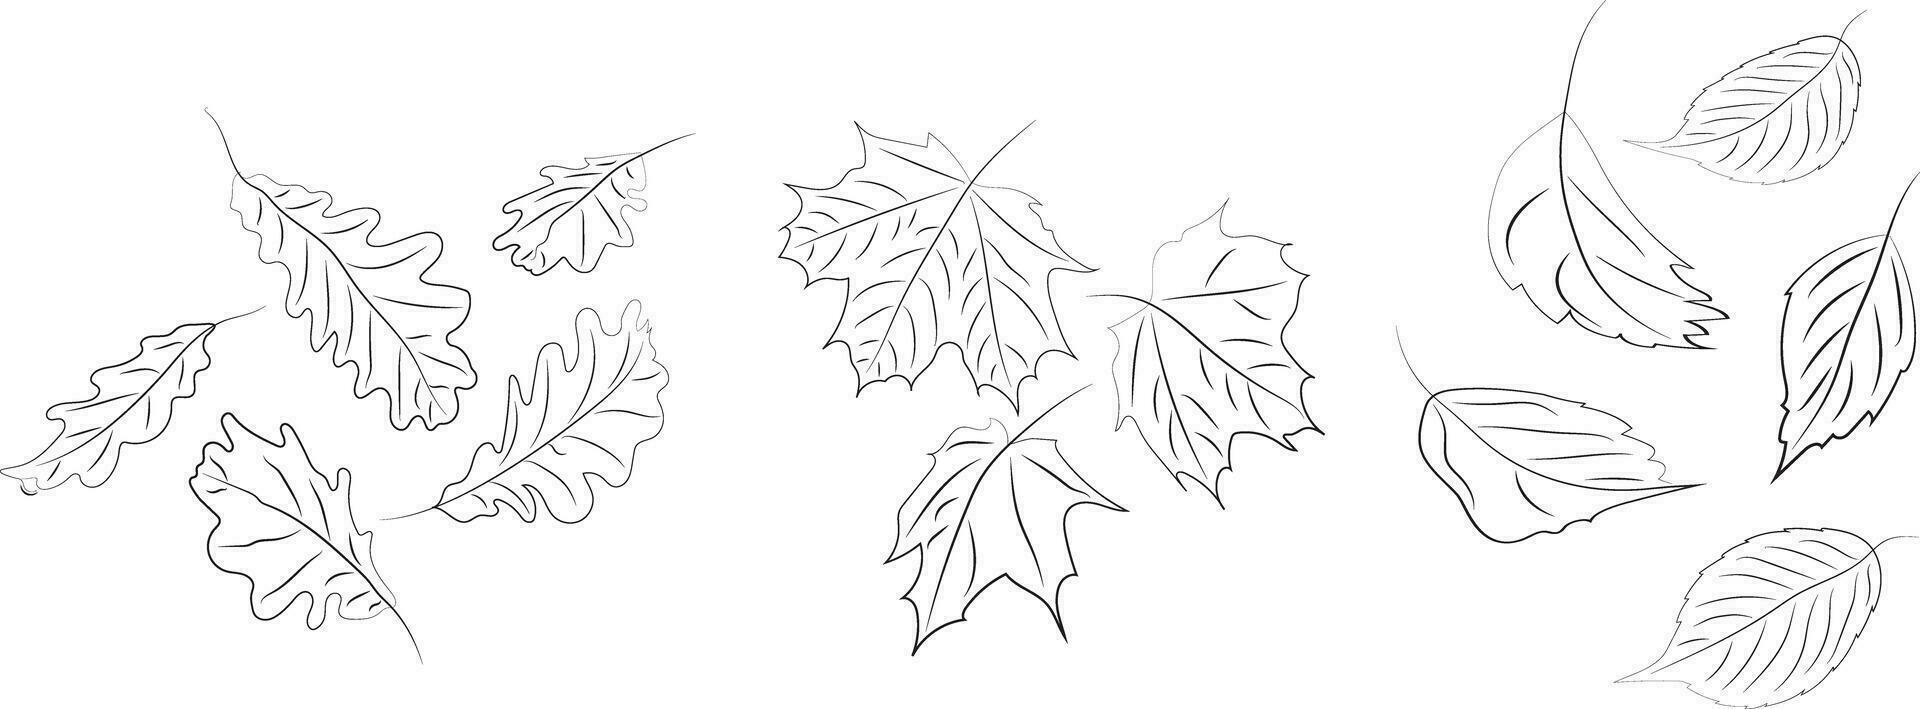 Line art. Autumn leaves. High quality vector illustration.